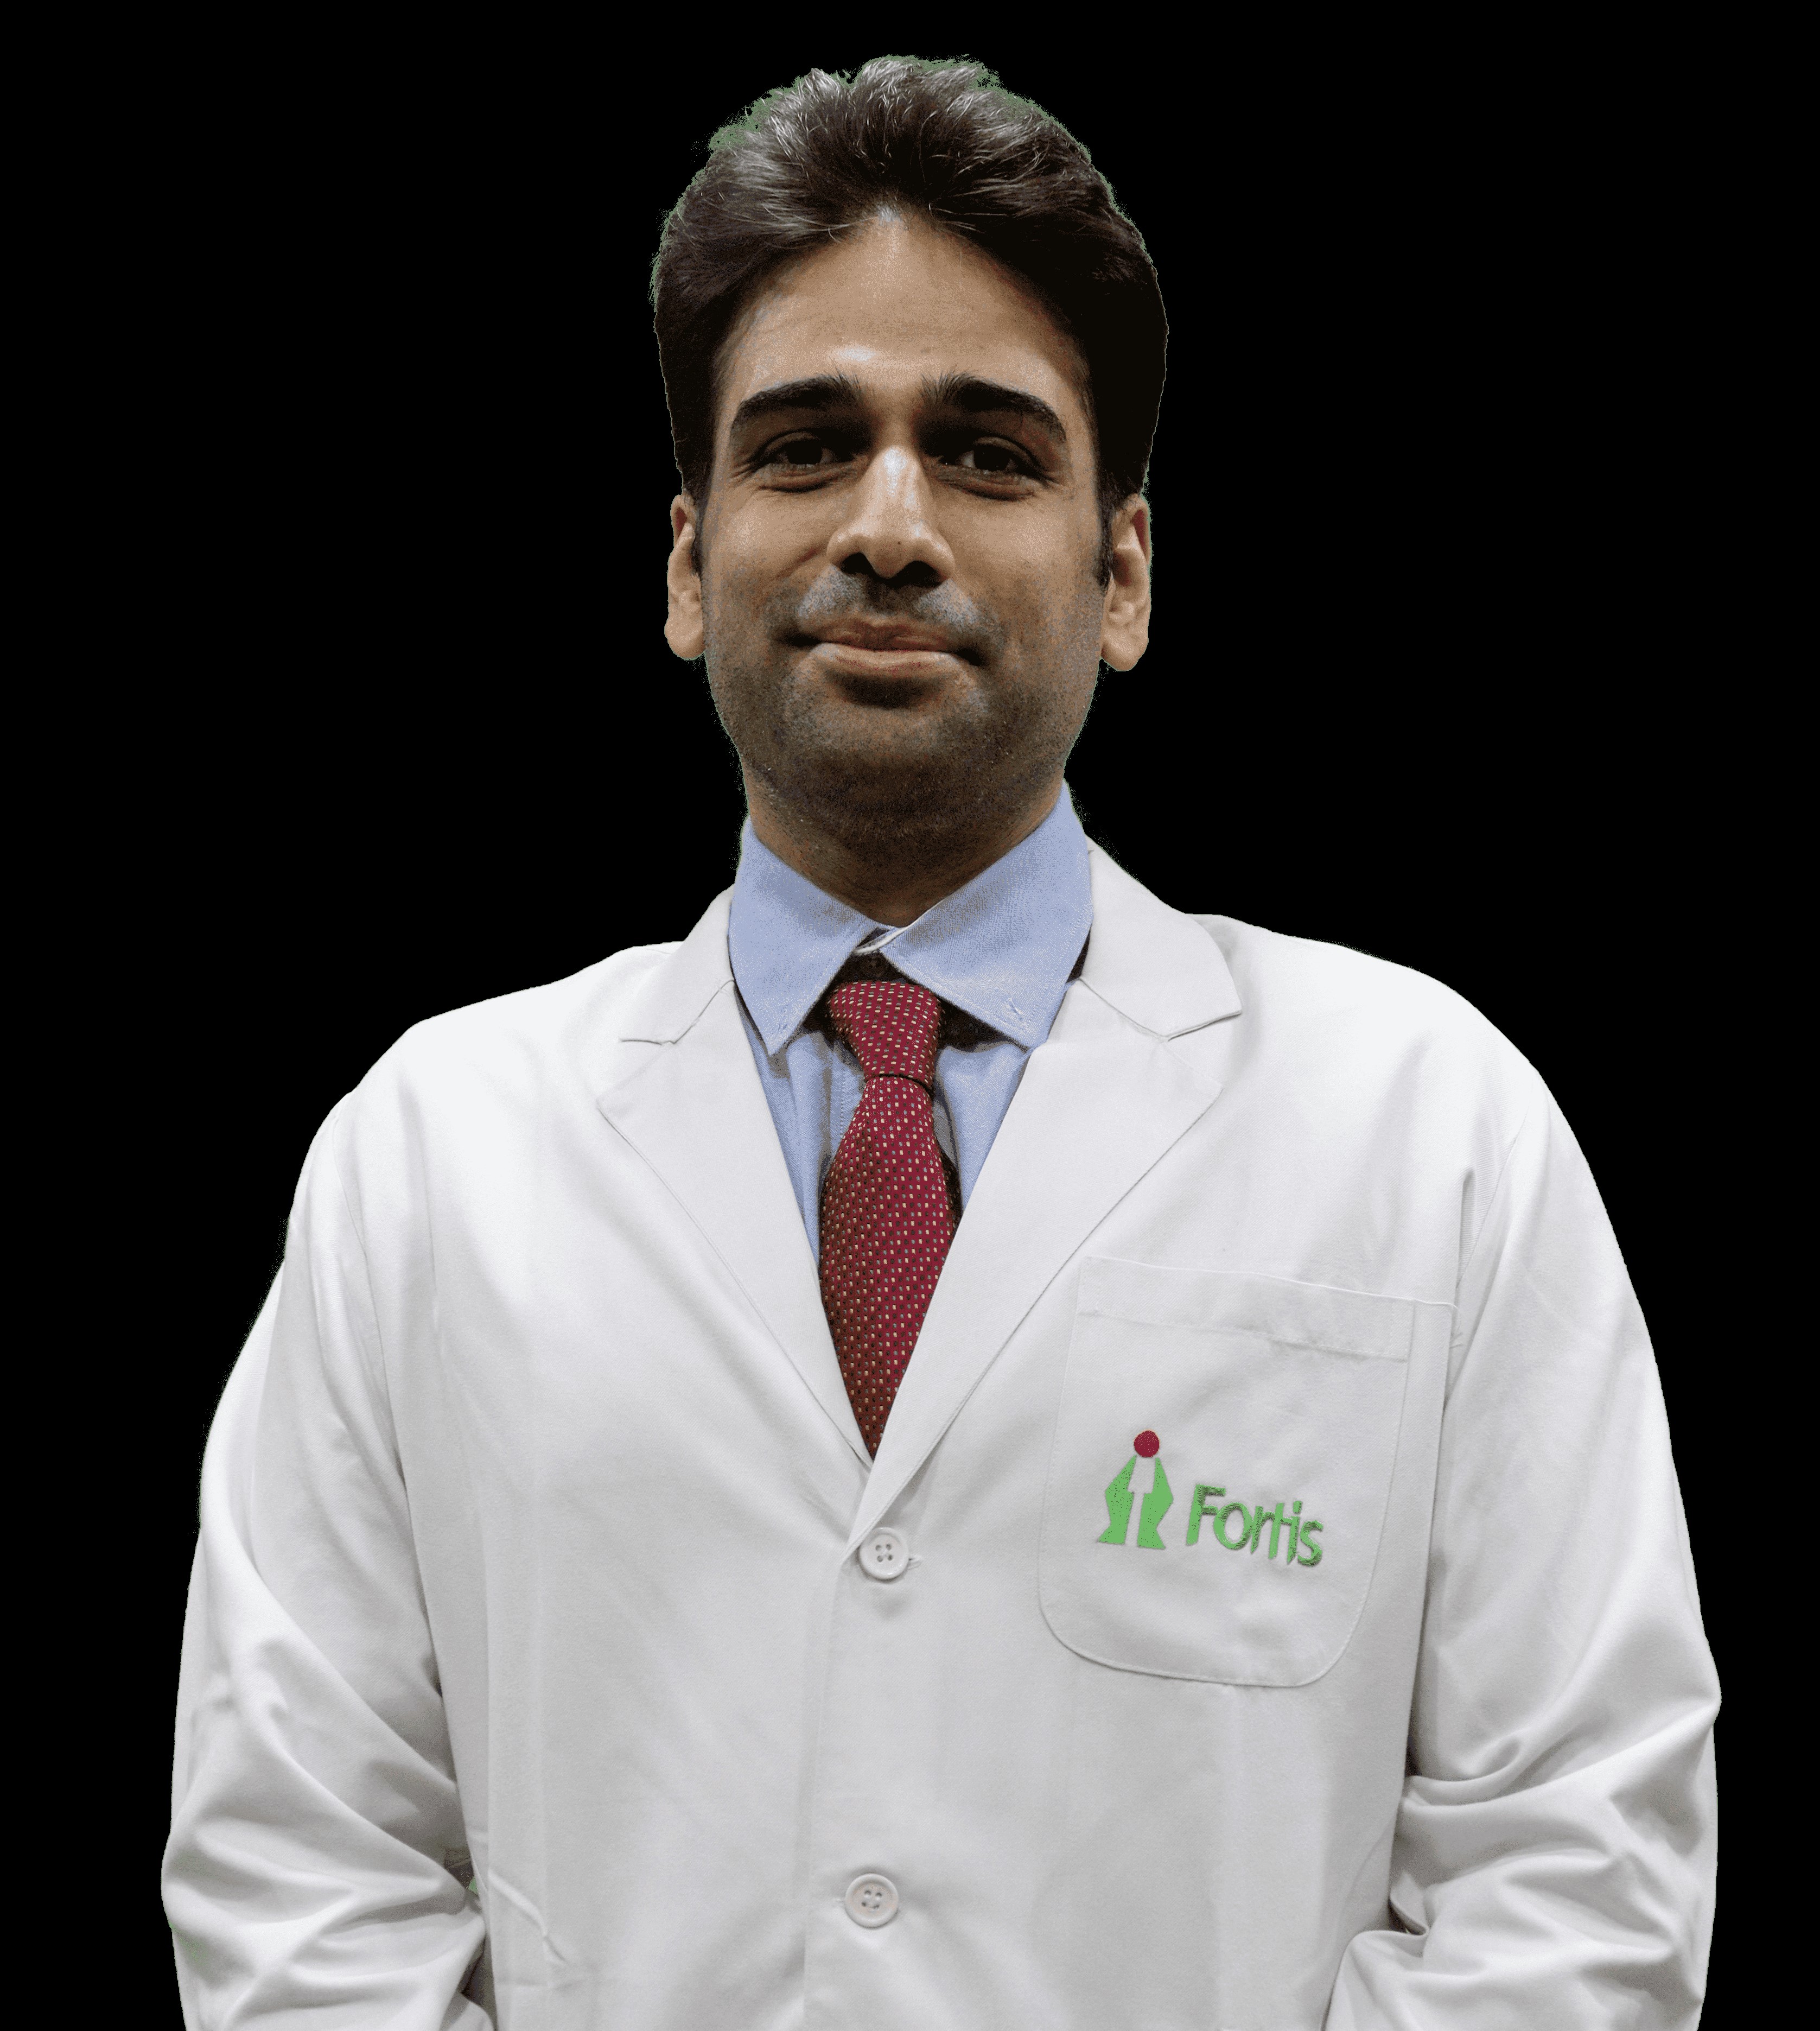 Dr. Abhiyutthan Singh Jadaon